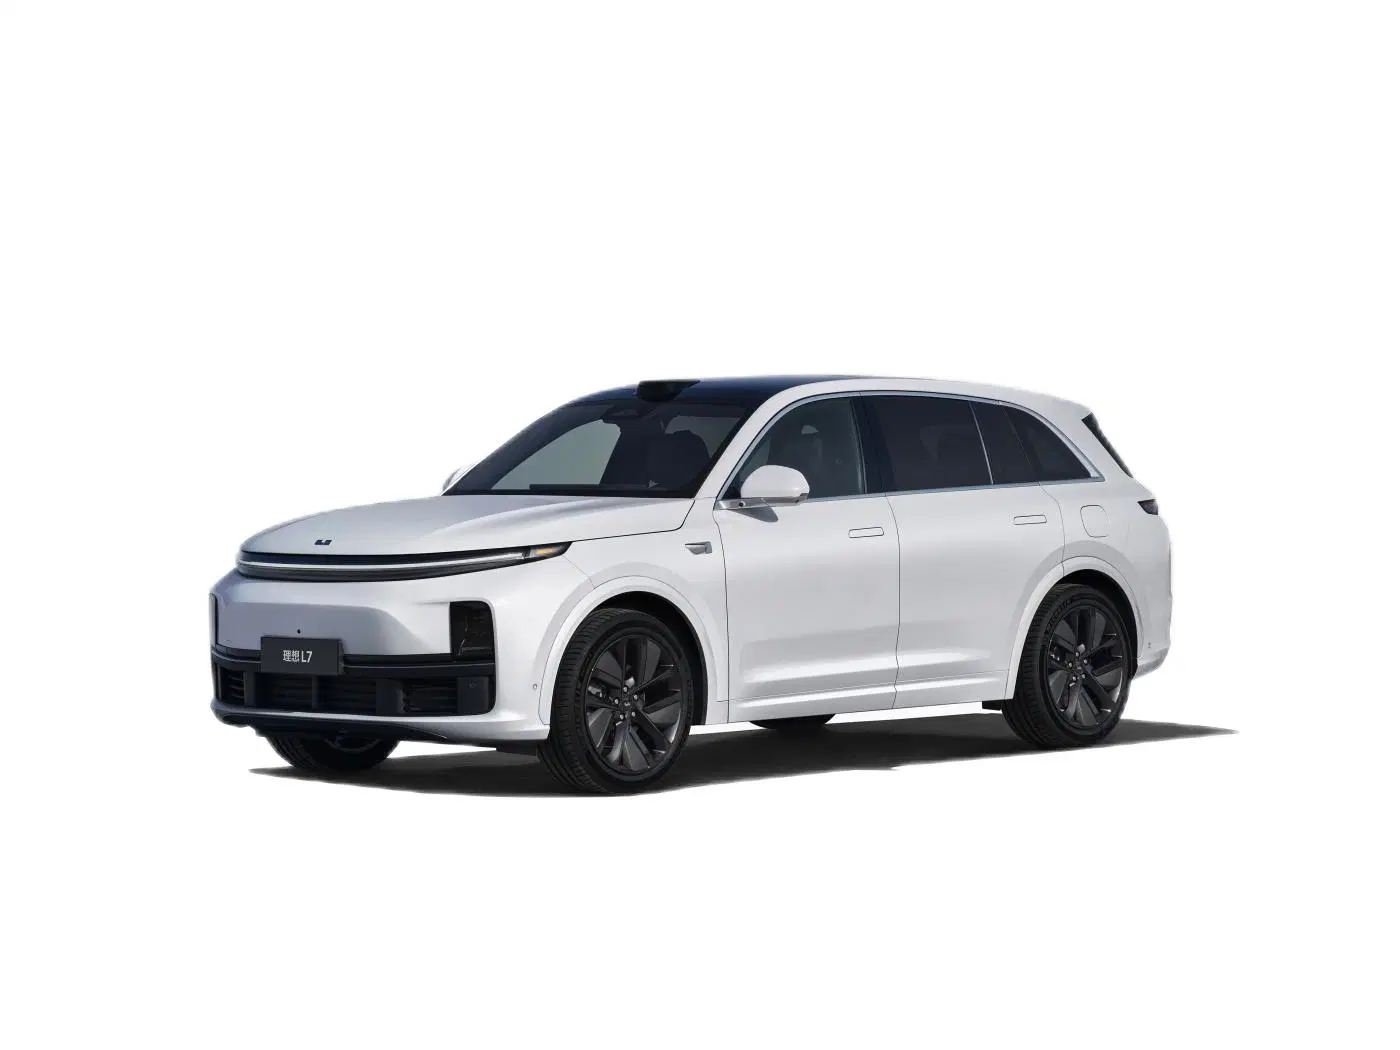 2023 Li L7 SUV Lixiang L7 Max Hybrid Car Range-Extended Electric Vehicle High Level New Energy Vehicle